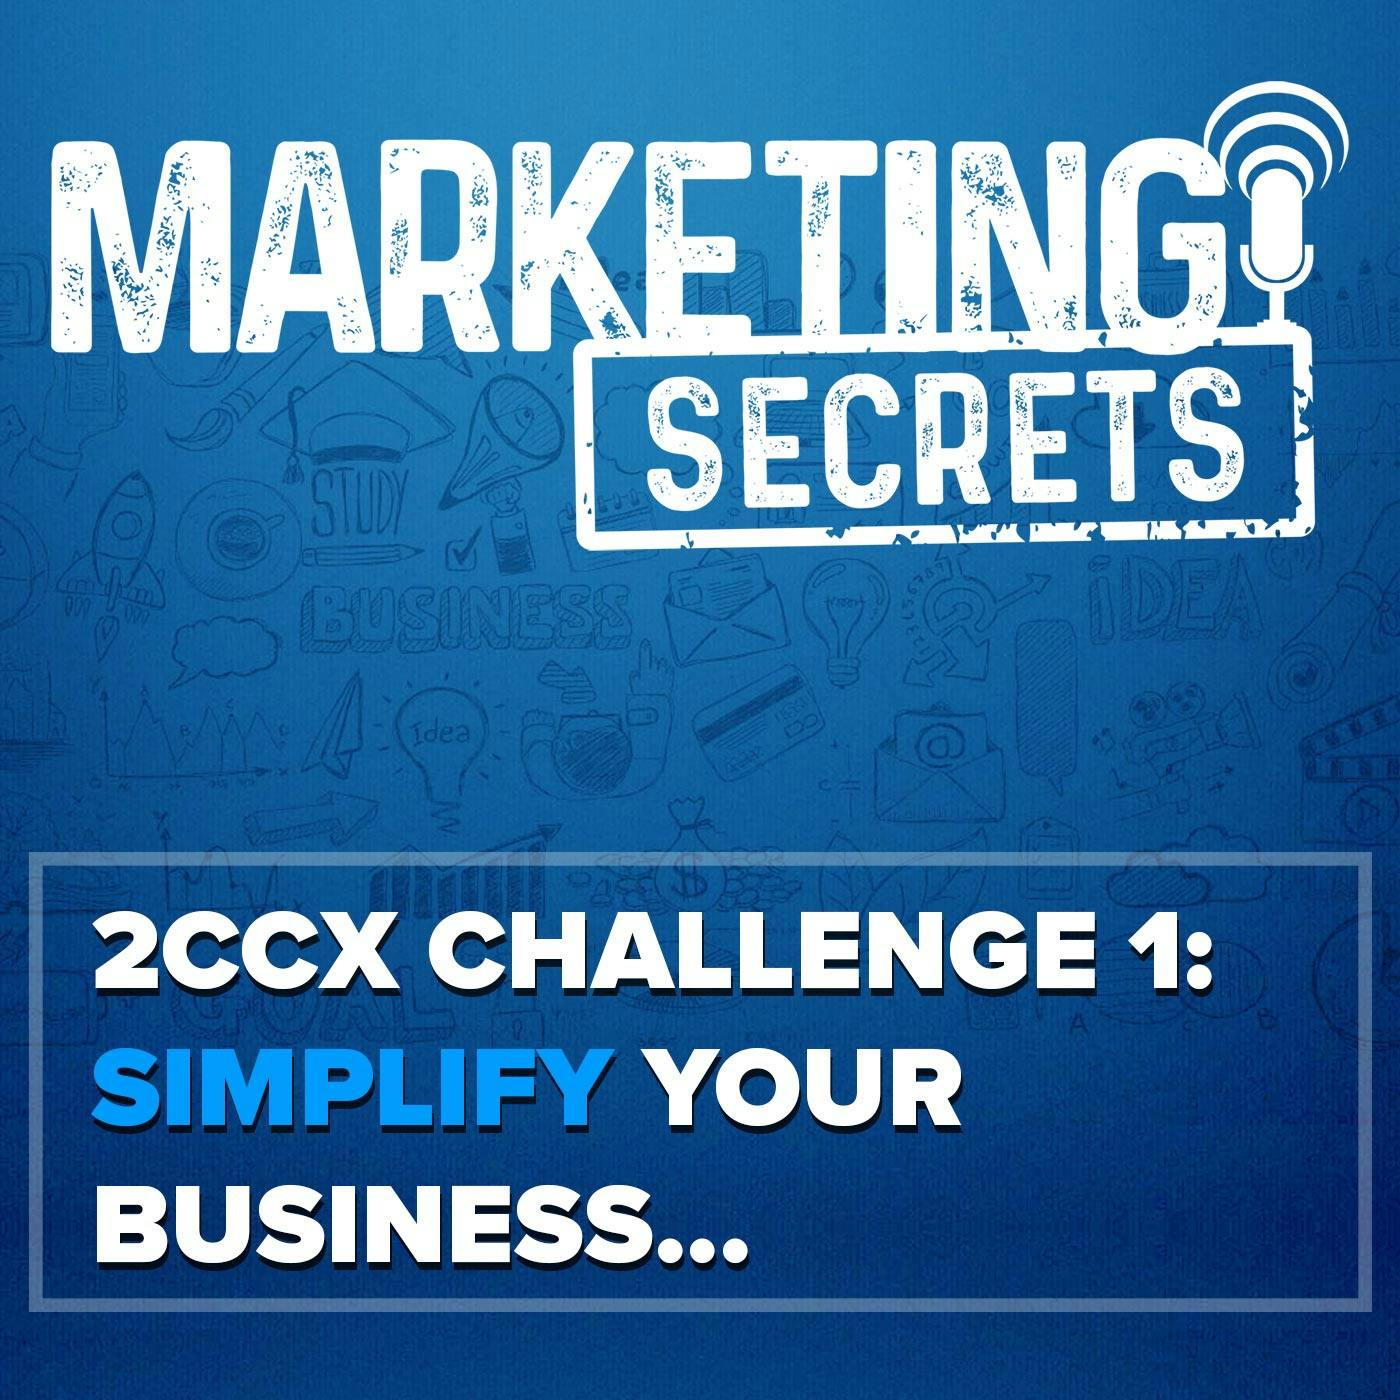 2CCX Challenge 1: Simplify Your Business...